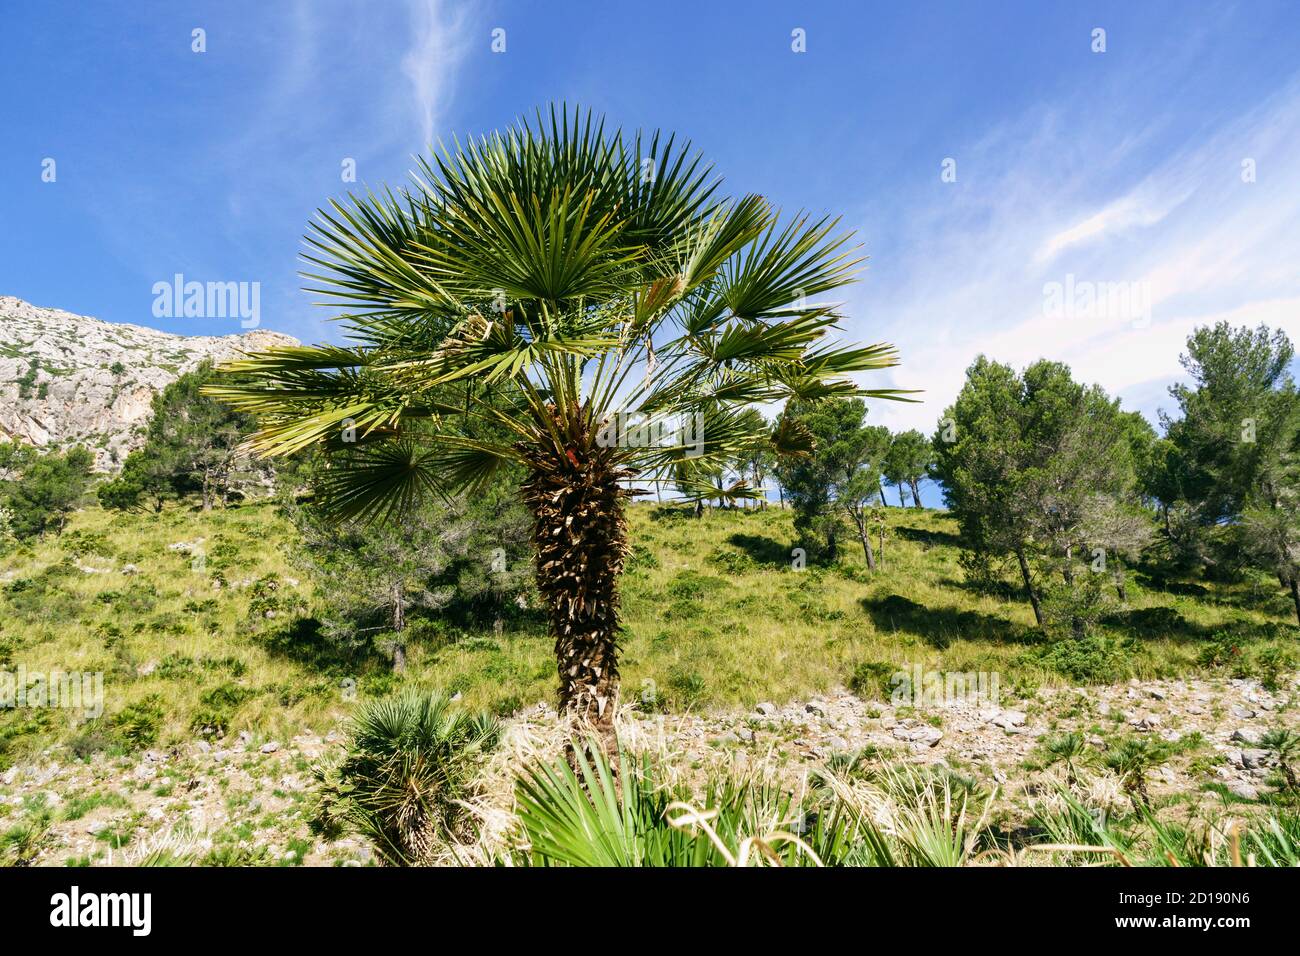 Chamaerops humilis, llamado palmito o palmitera, Comellar de Ses Sinies, Calvia, sierra de Tramuntana, Mallorca, Spagna Foto Stock